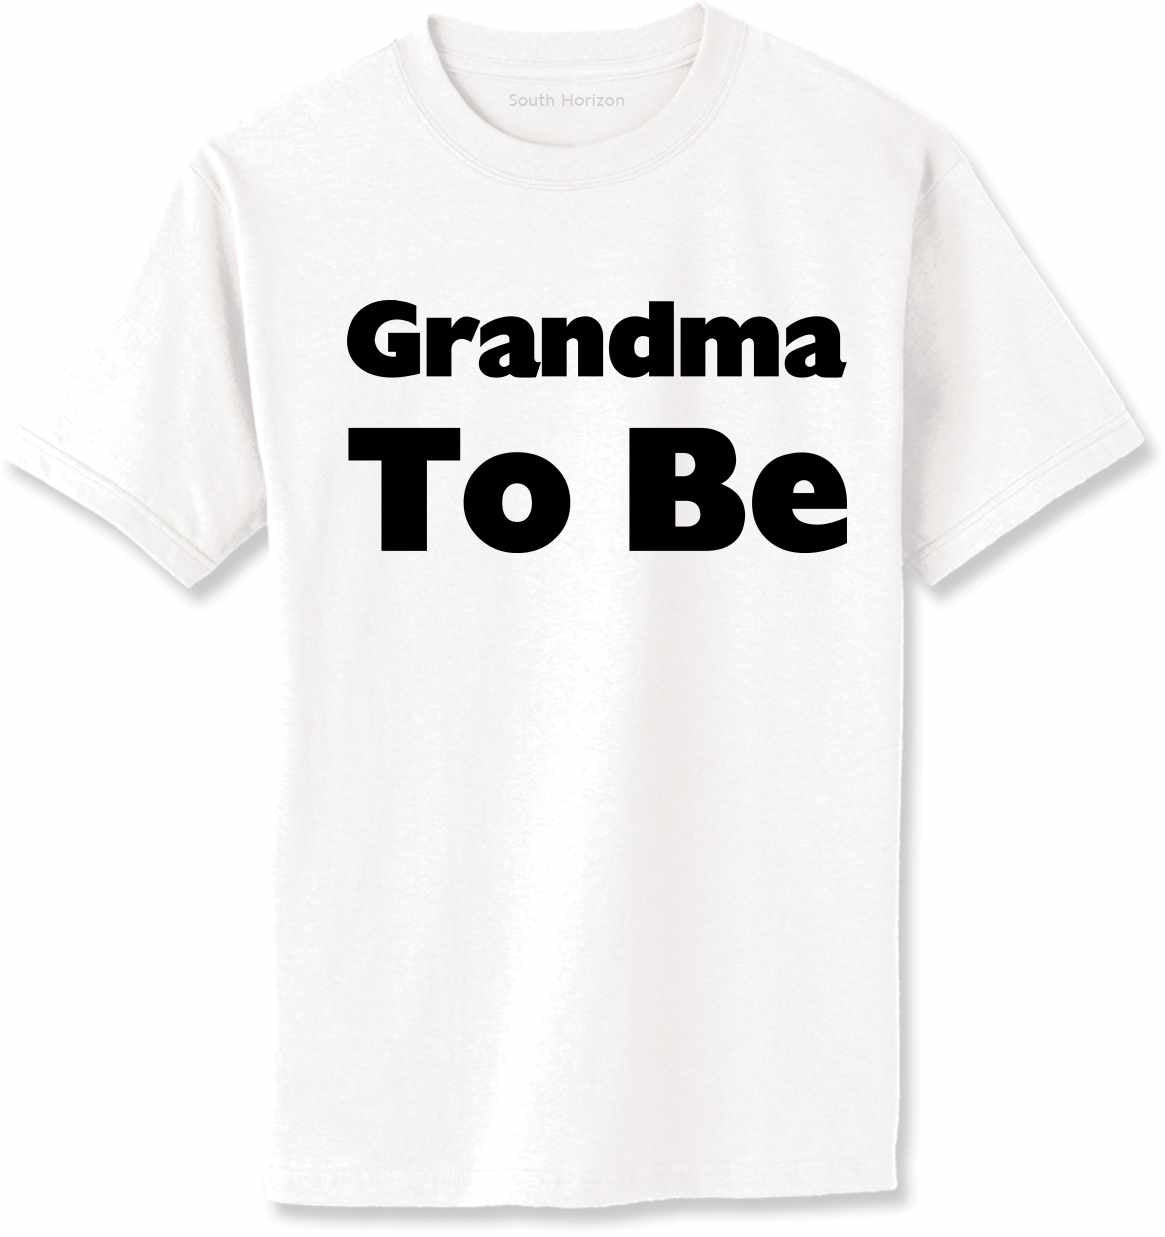 Grandma To Be on Adult T-Shirt (#726-1)